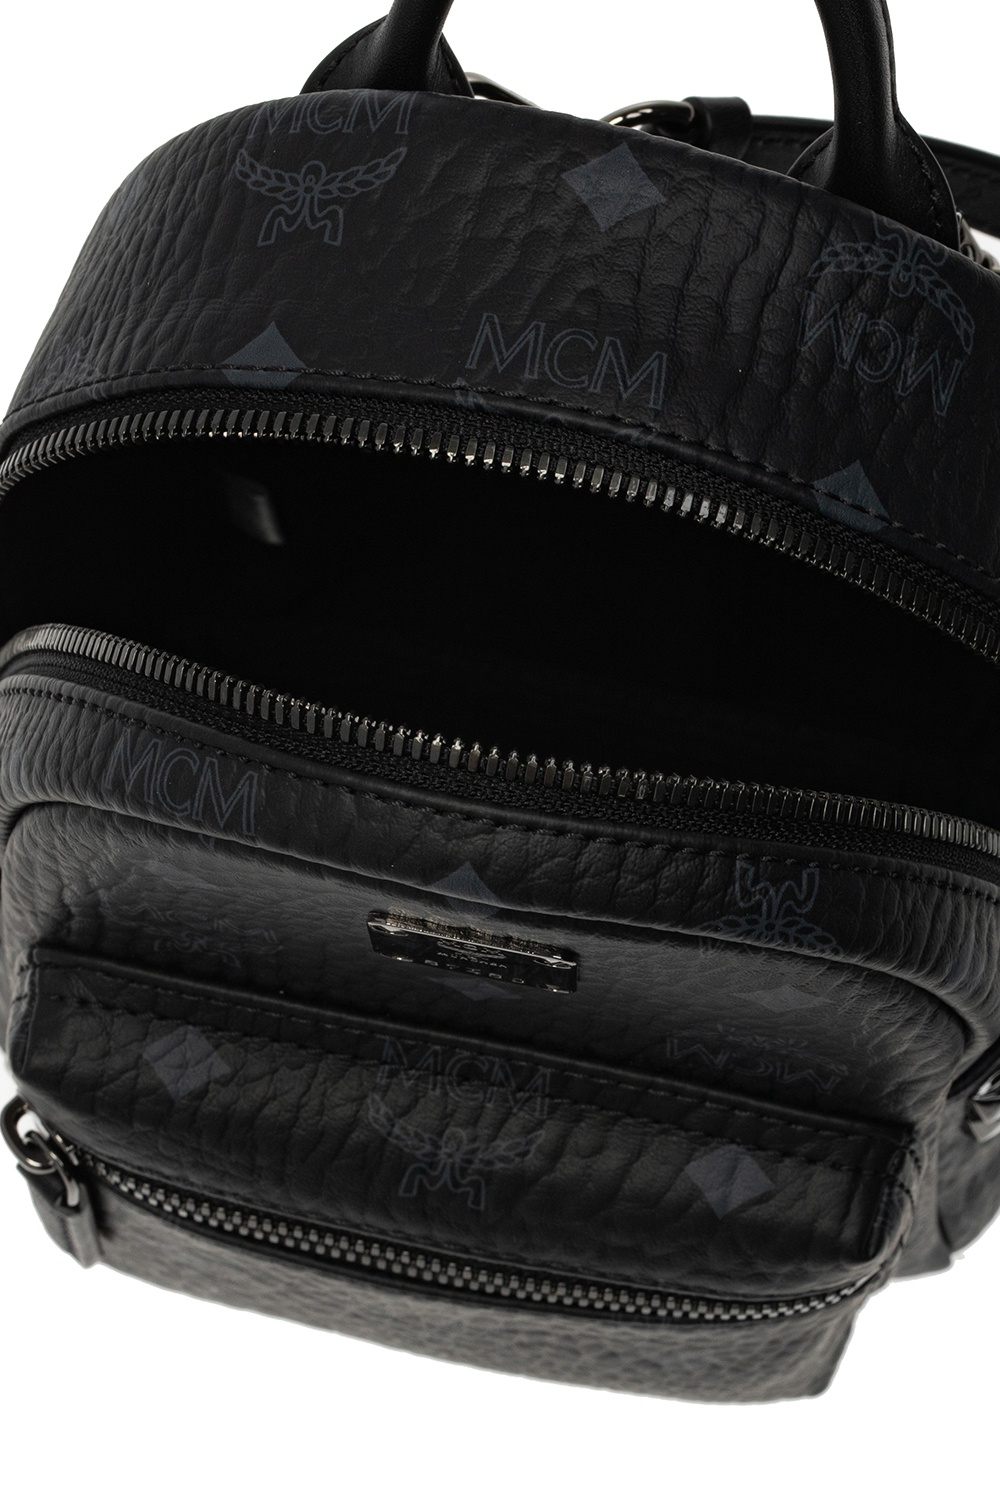 MCM Patterned typu backpack